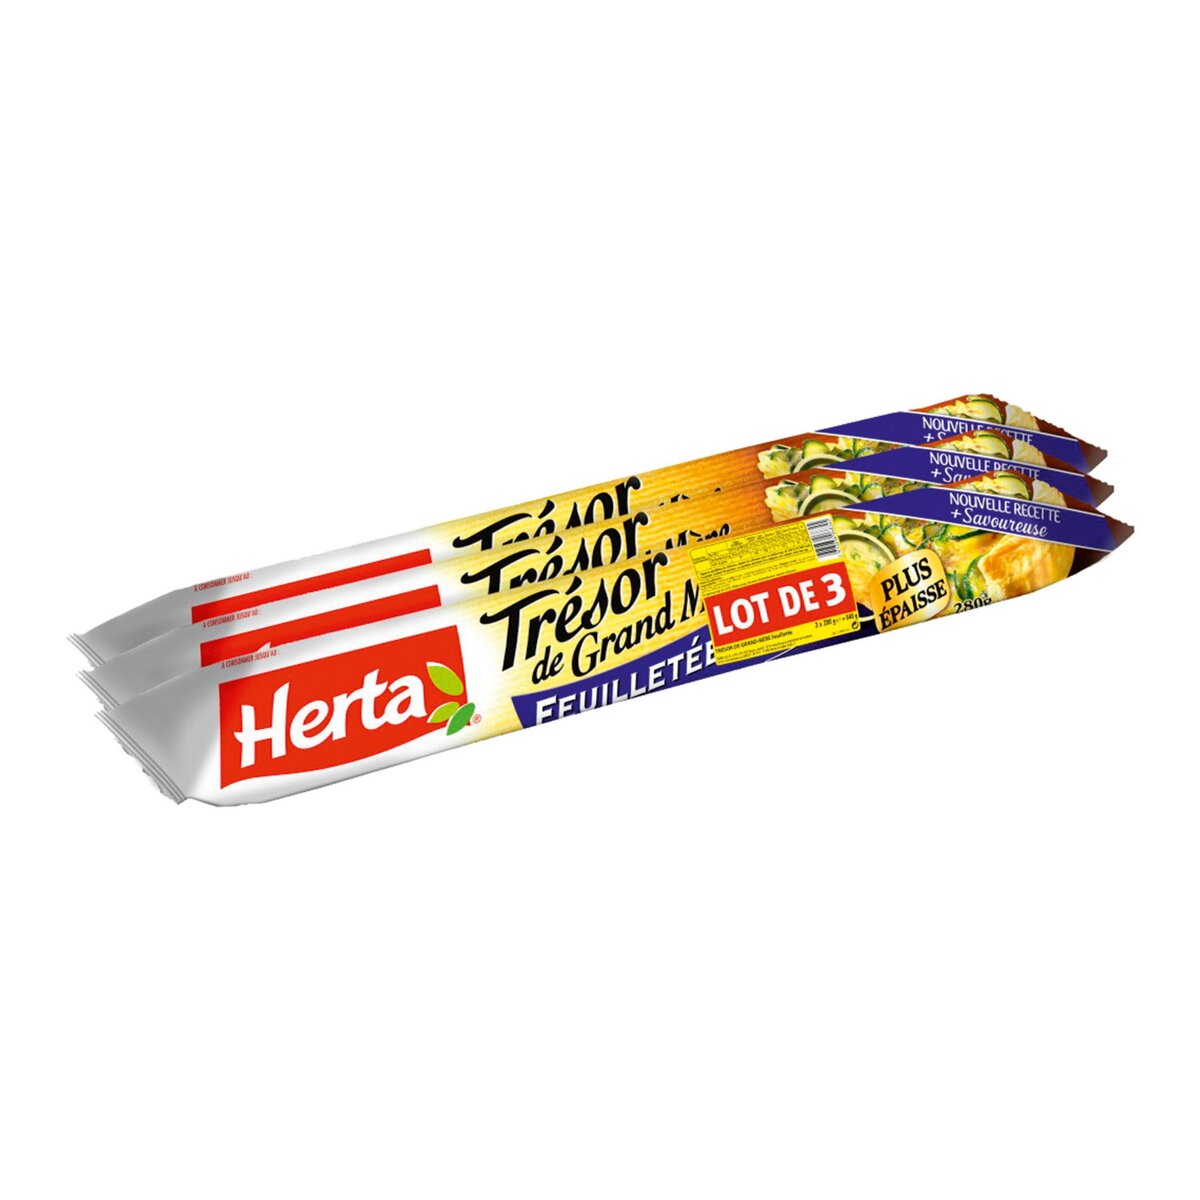 HERTA Herta trésor de grand mère pâte feuilletée 3x280g